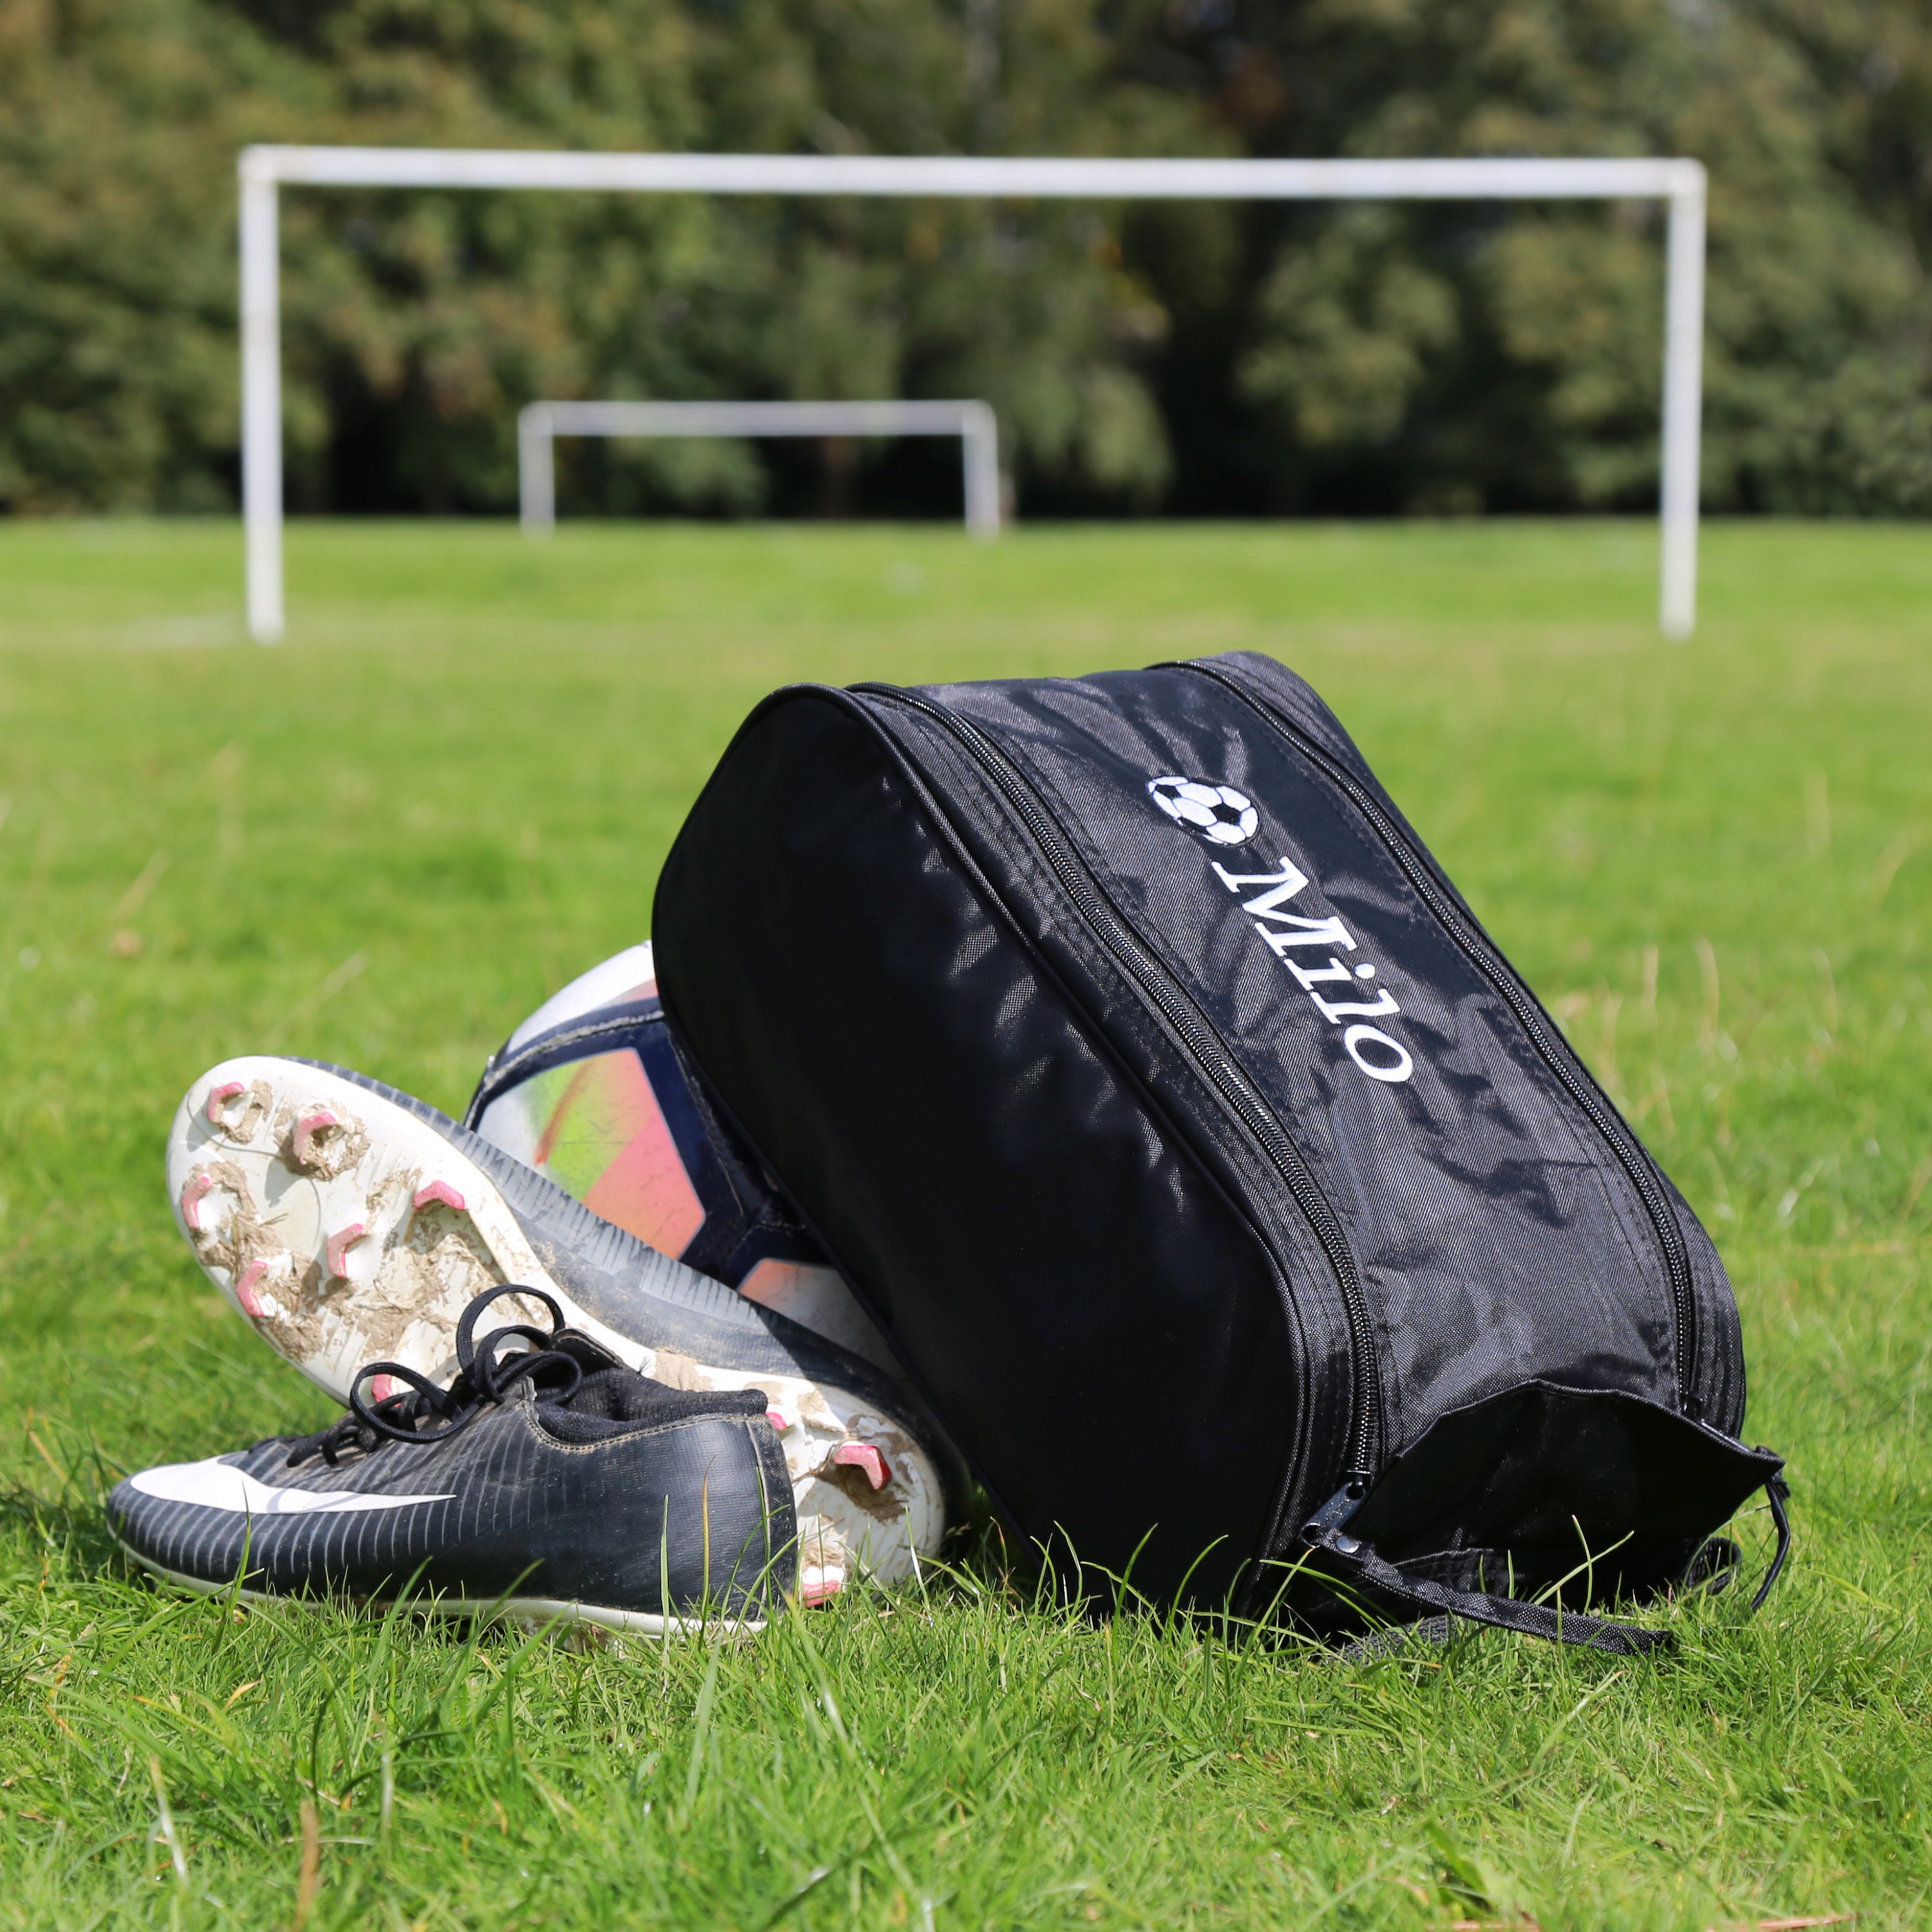 Personalised Football Boot Bag By Jack Spratt | notonthehighstreet.com